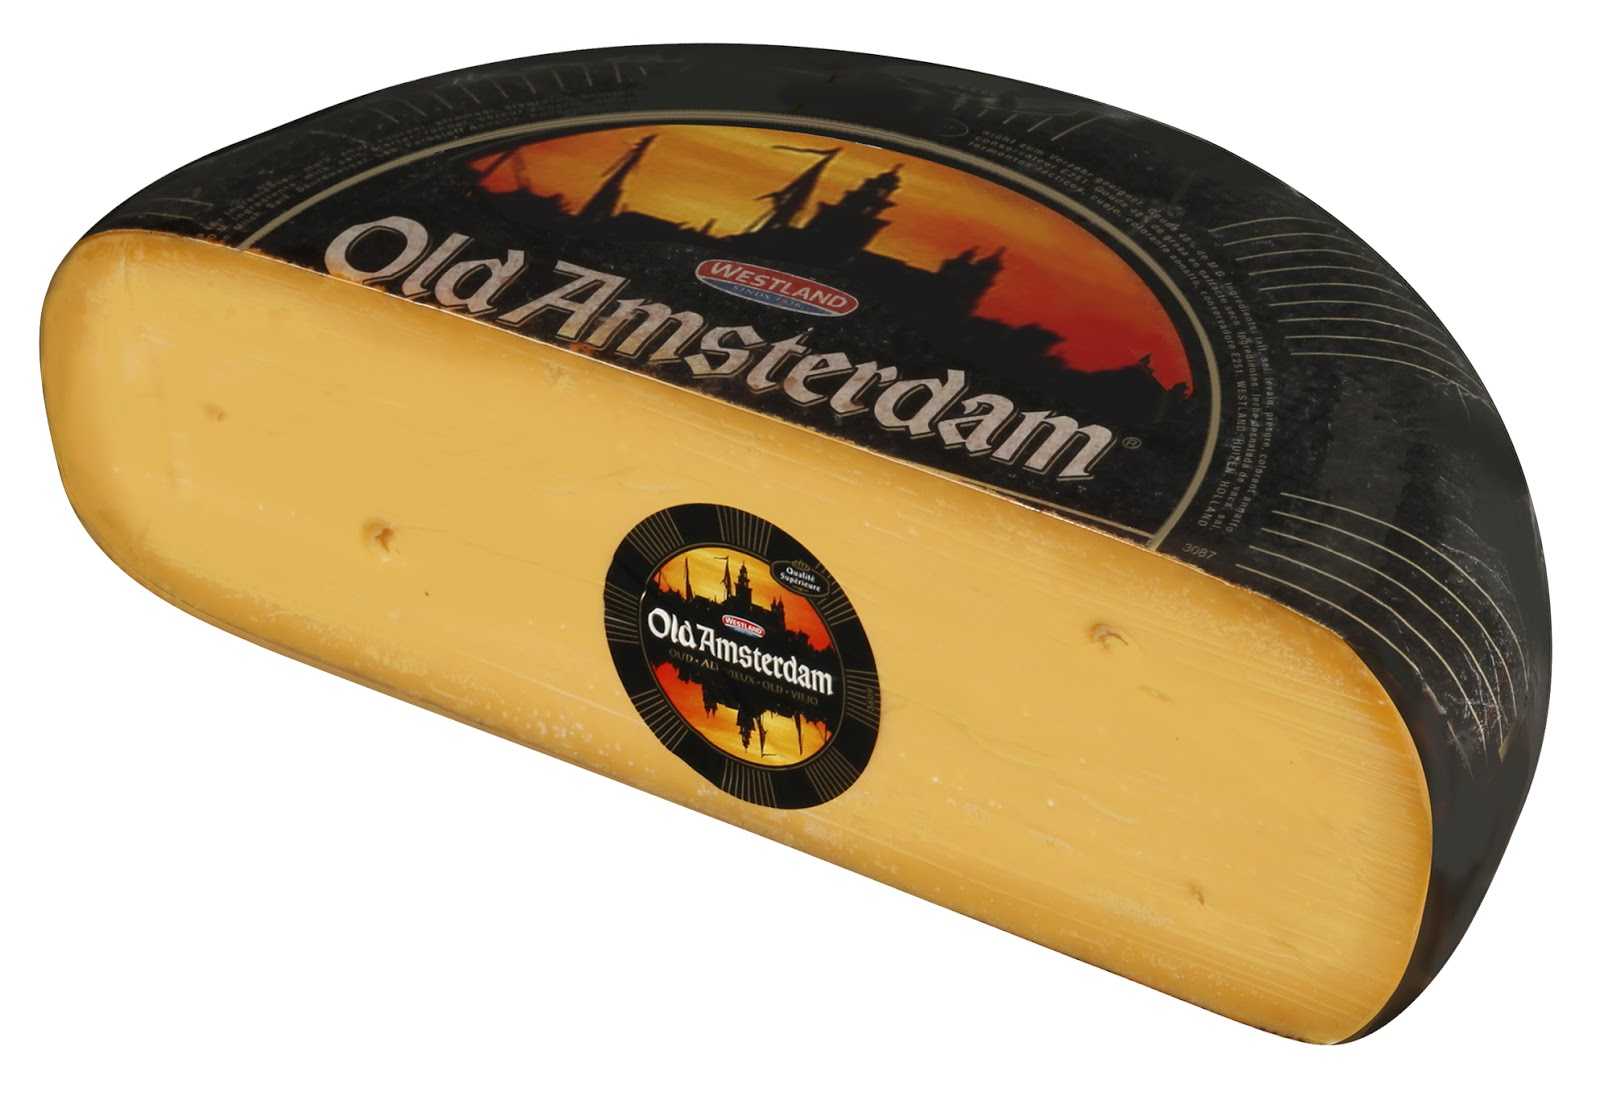 амстердам сыр